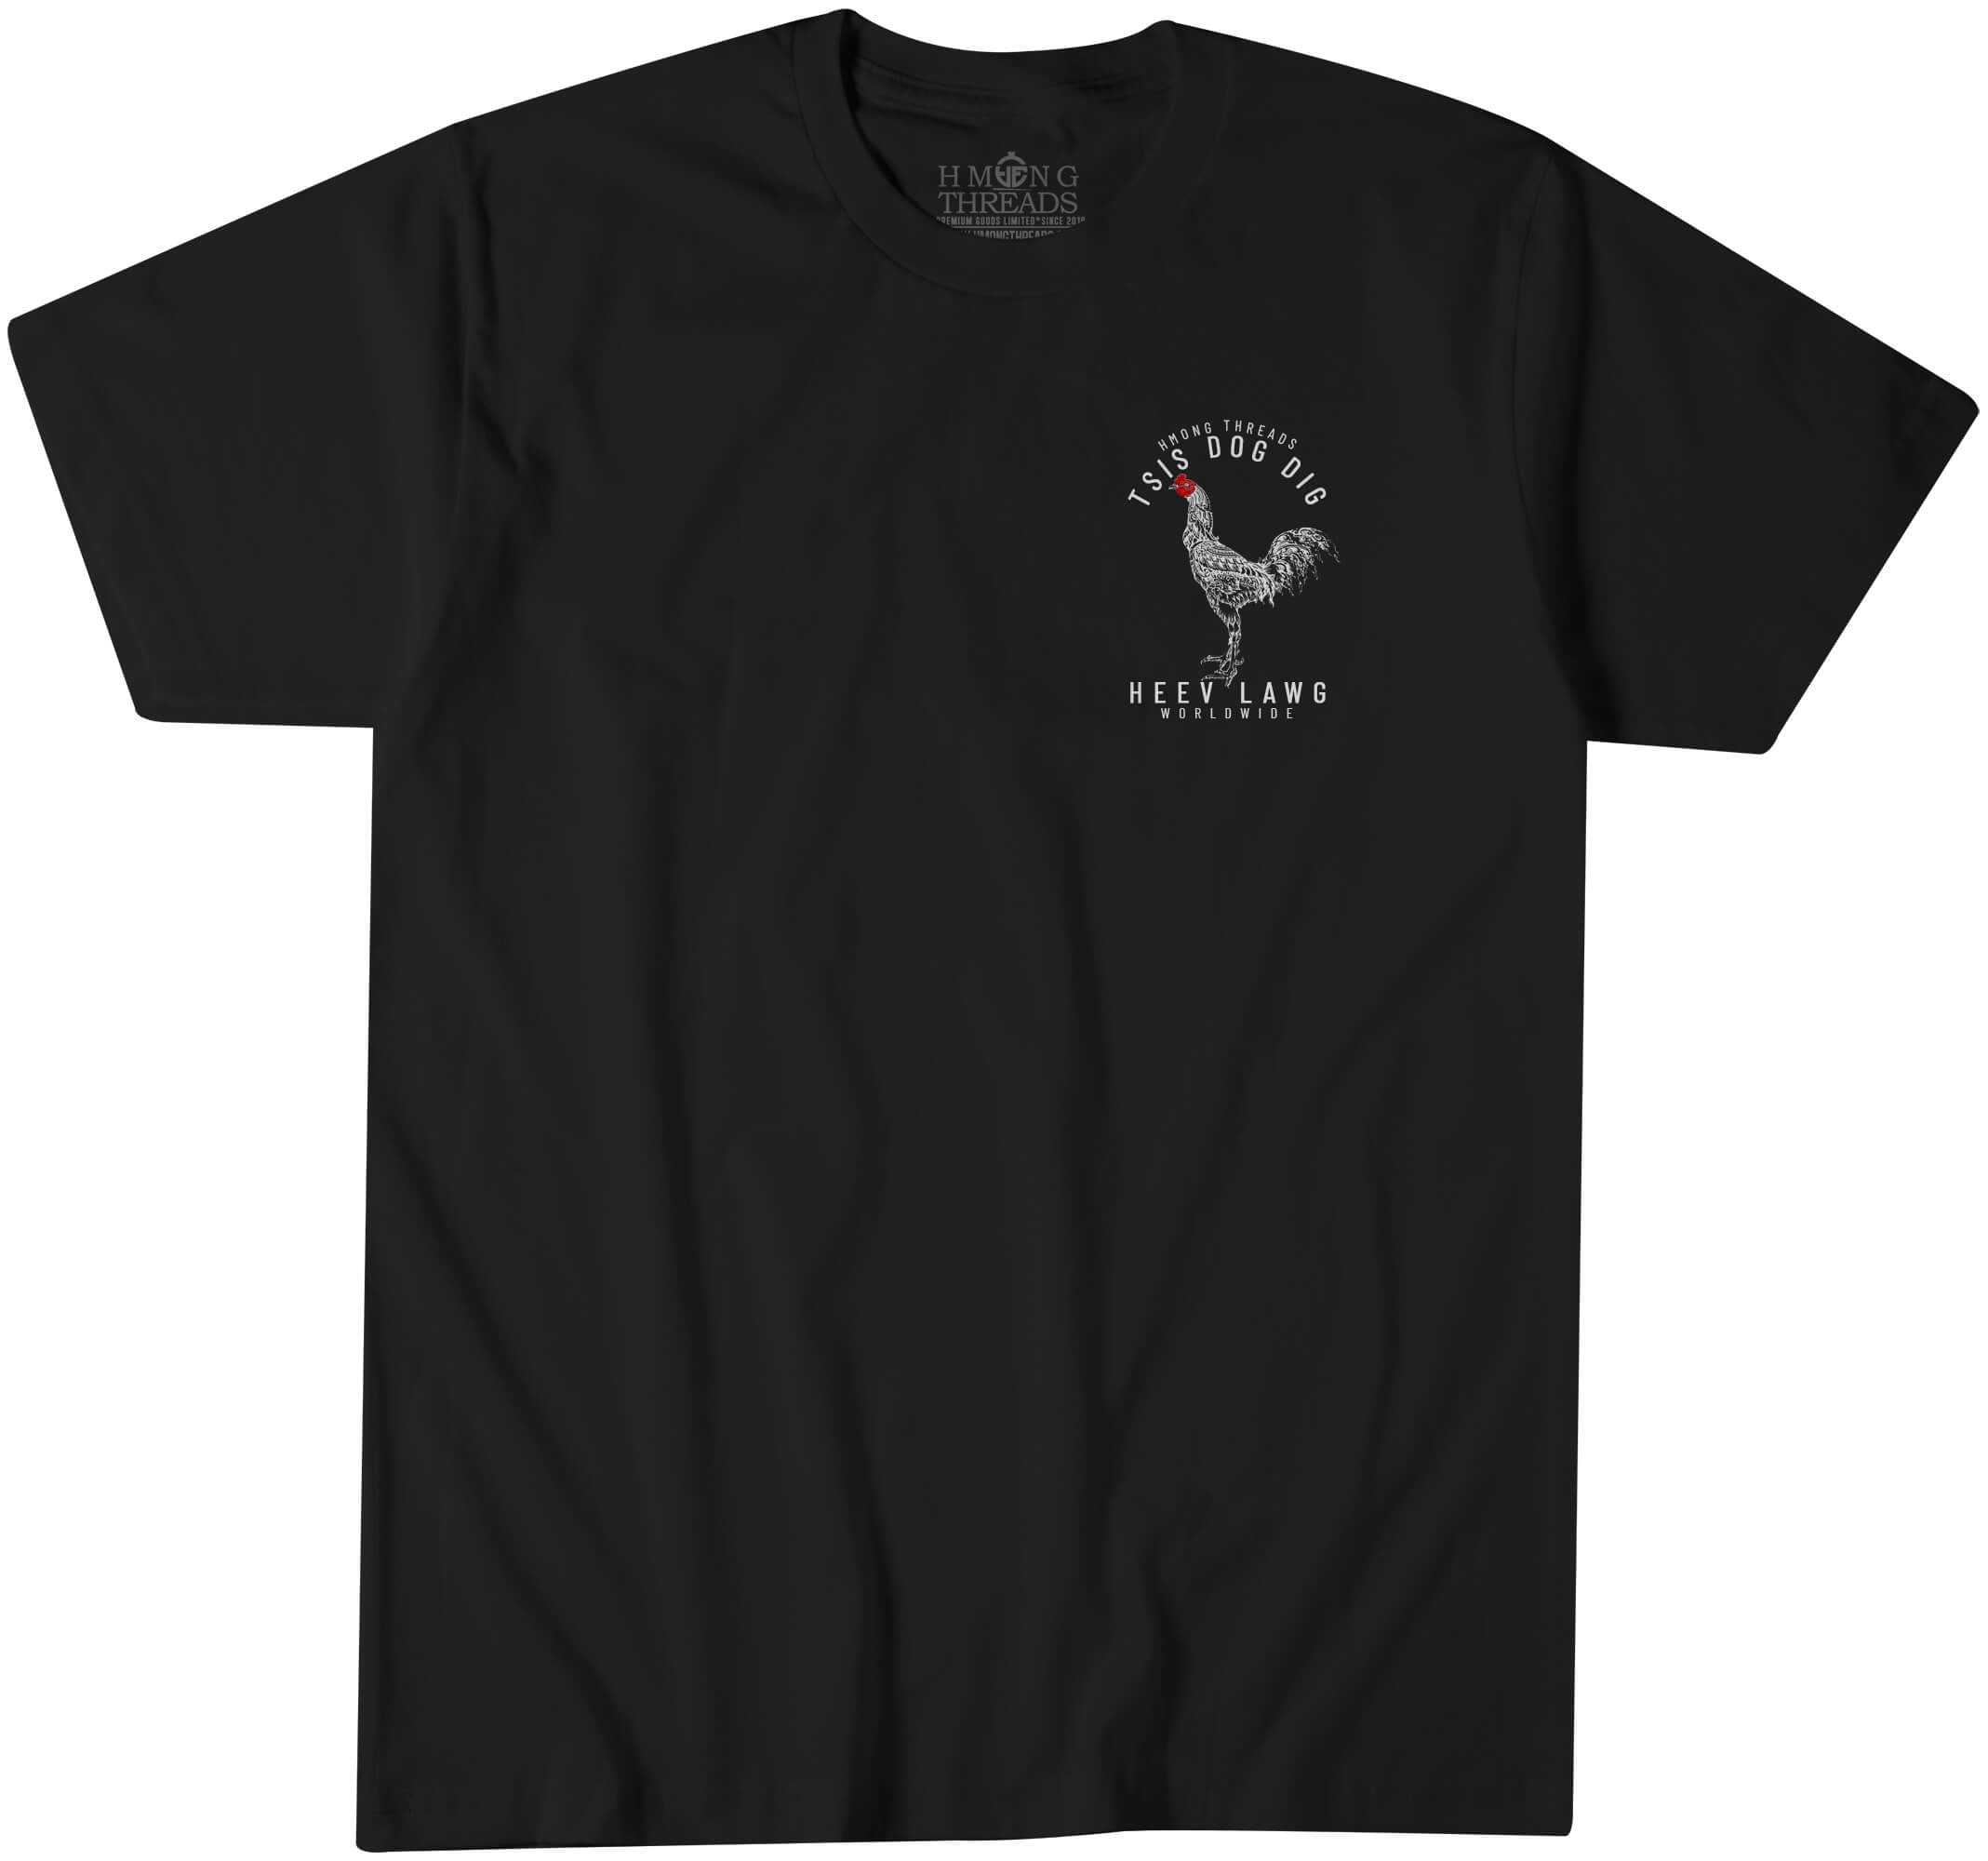 Tsis Dog Dig - Black T-Shirt